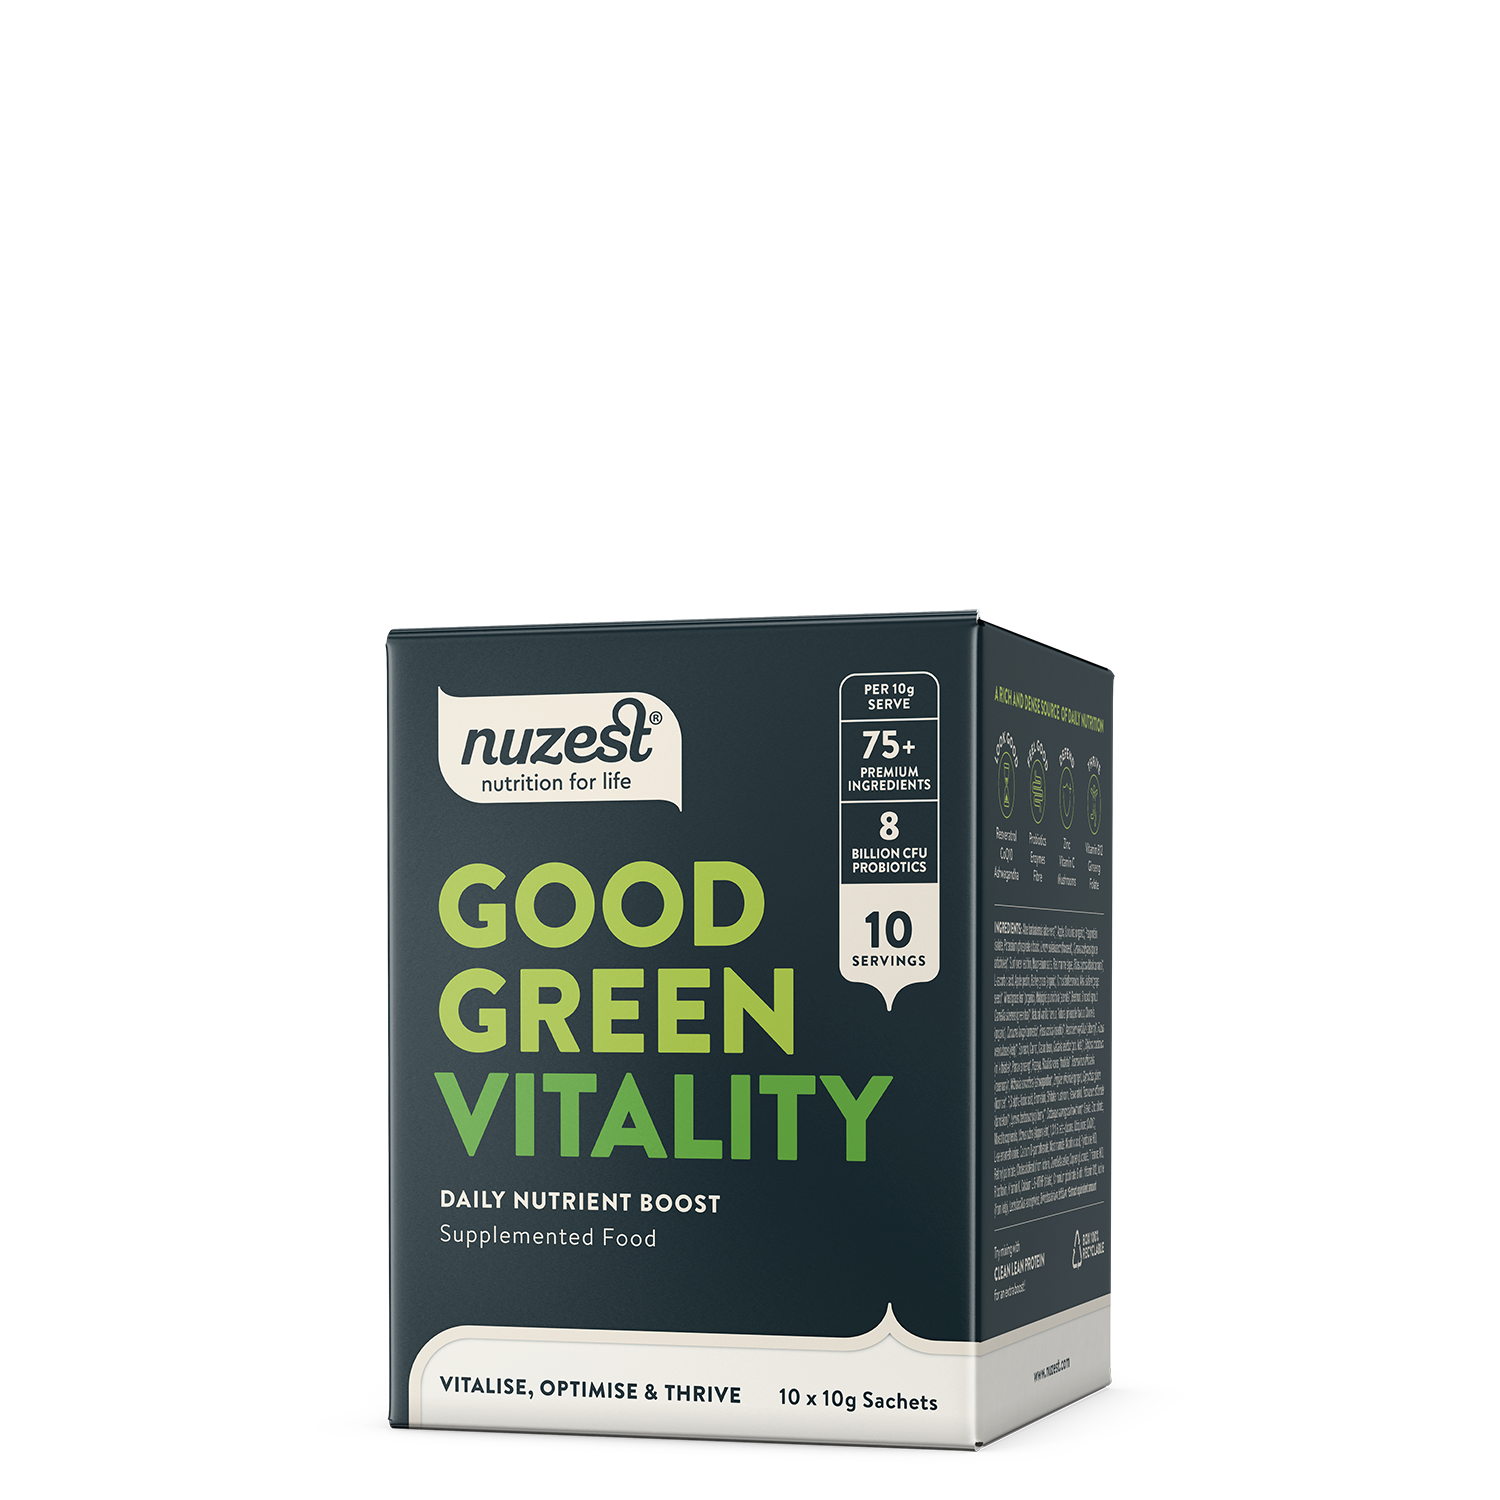 NuZest Good Green Vitality 10 x 10g Sachet Box